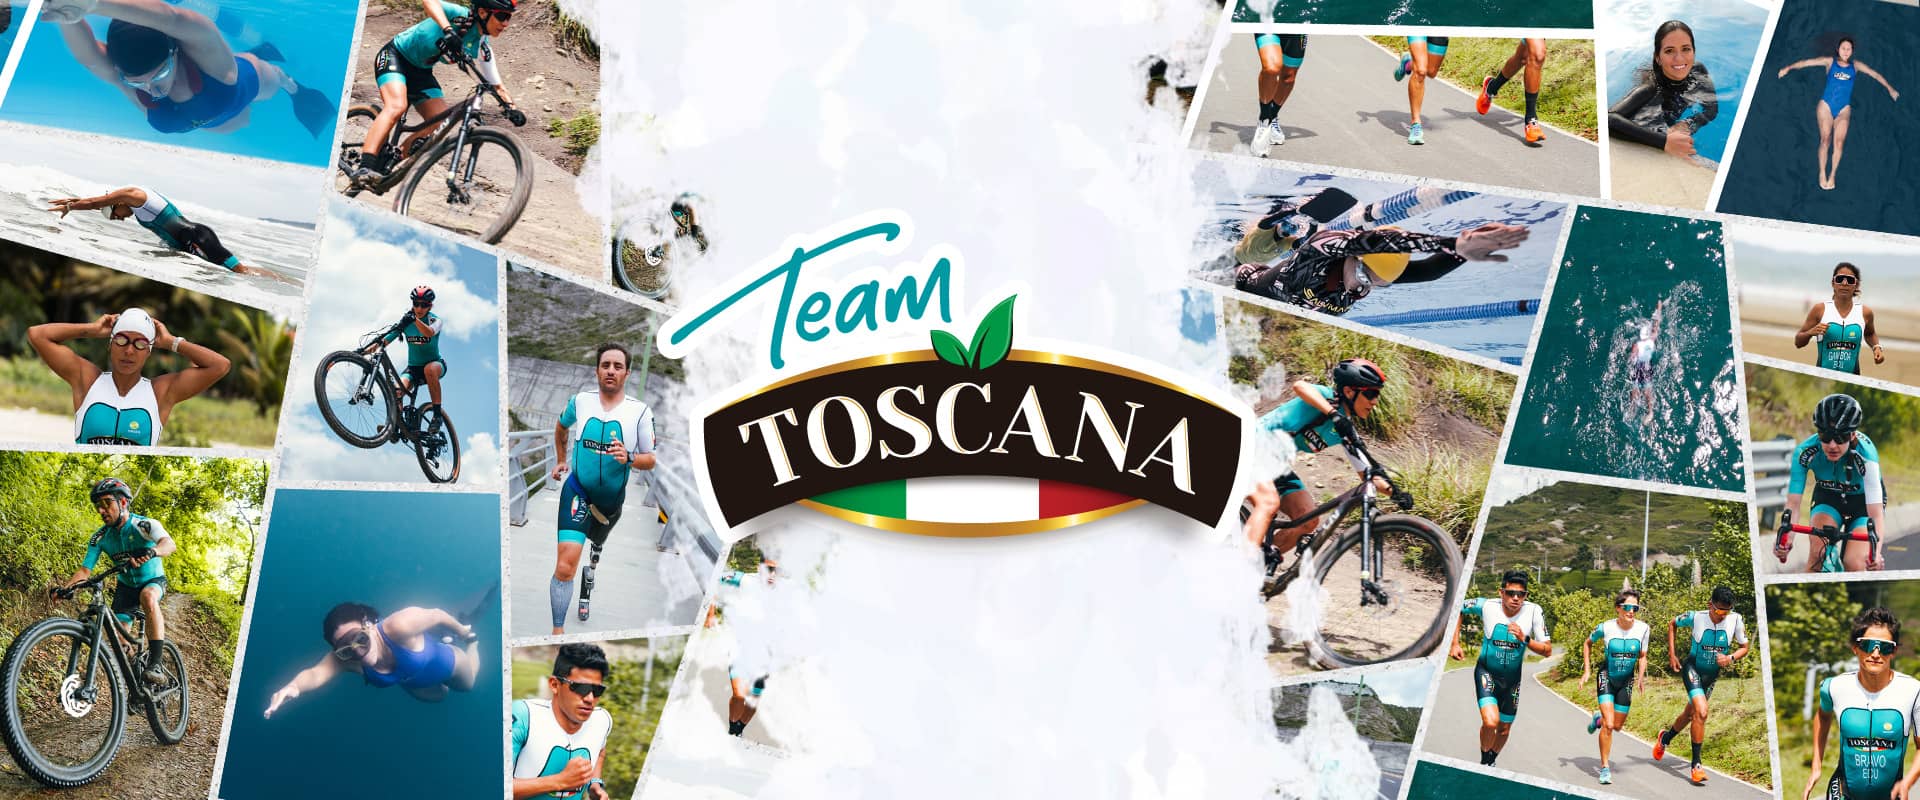 team toscana banner 2